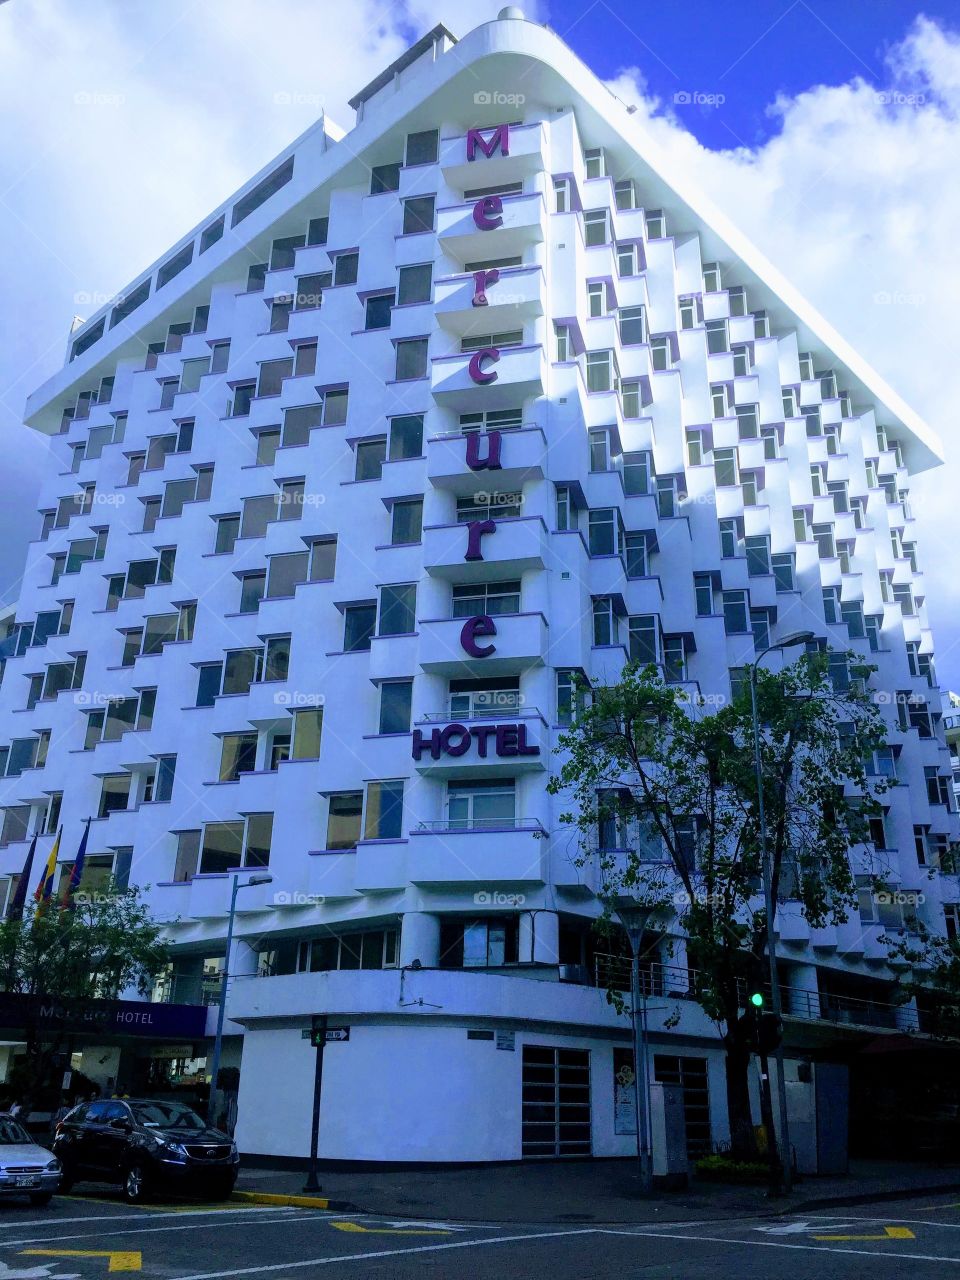 Hotel Merecure.